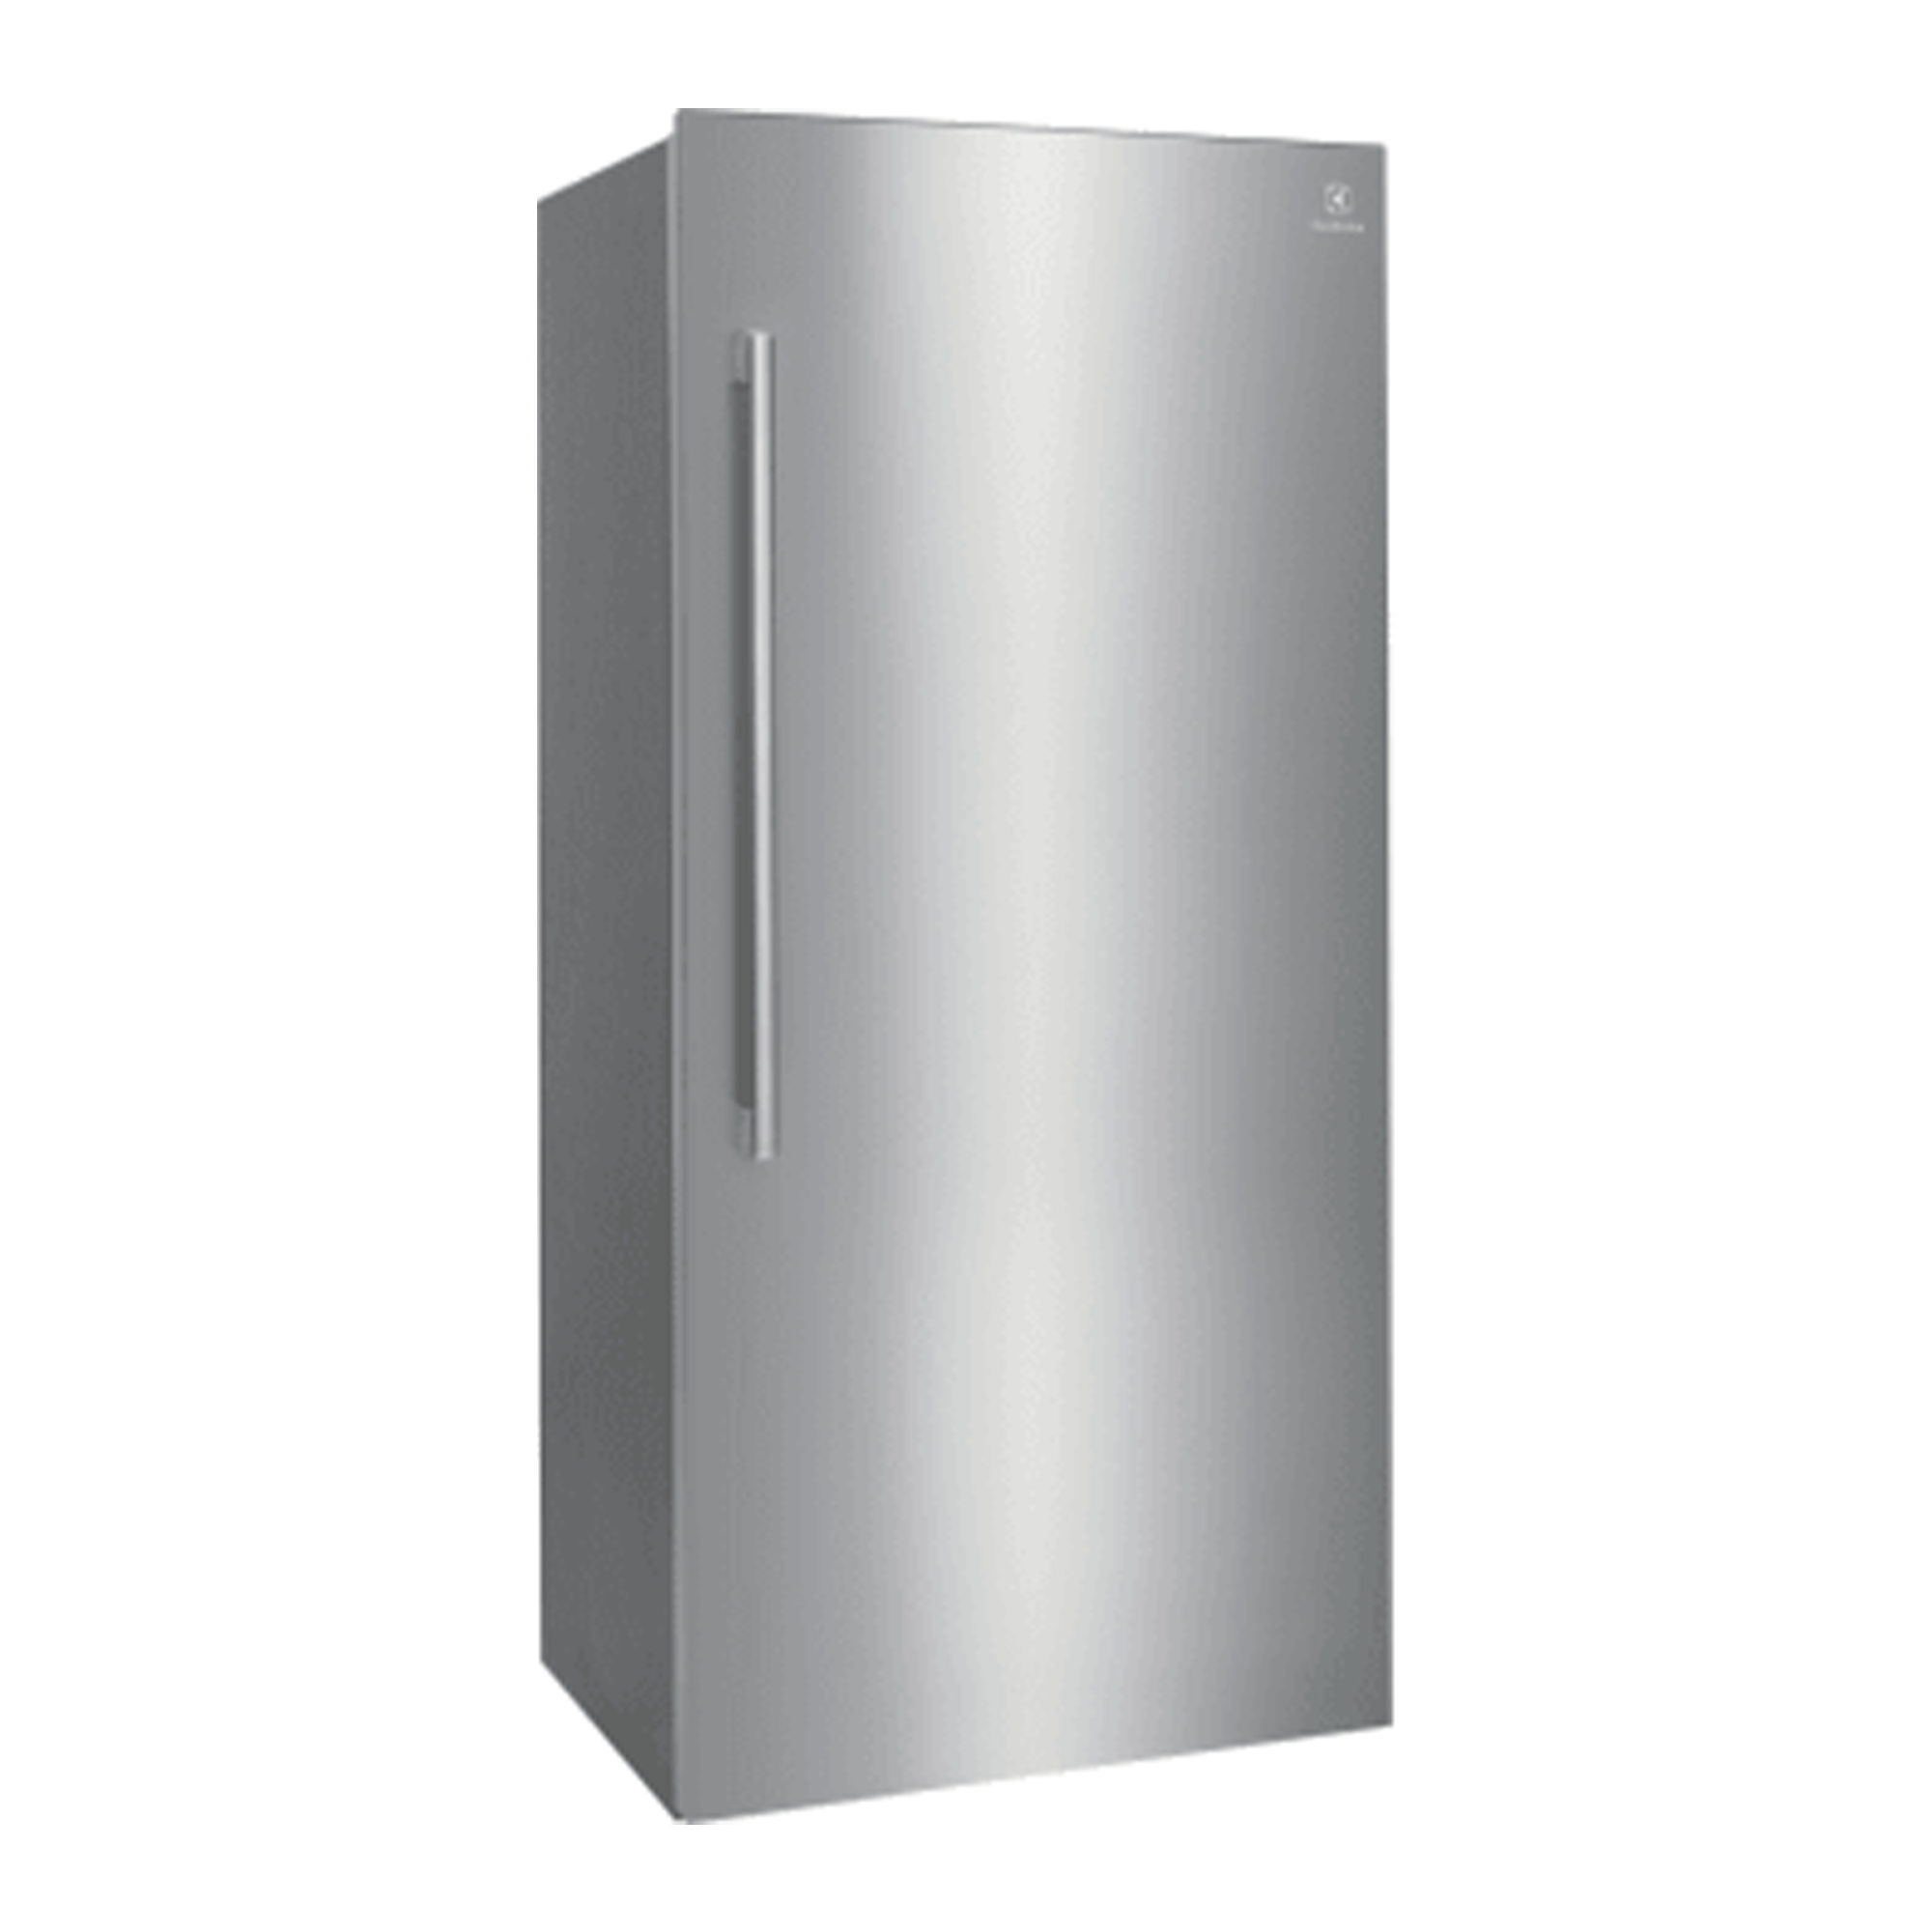 single door fridge stainless steel refrigerator